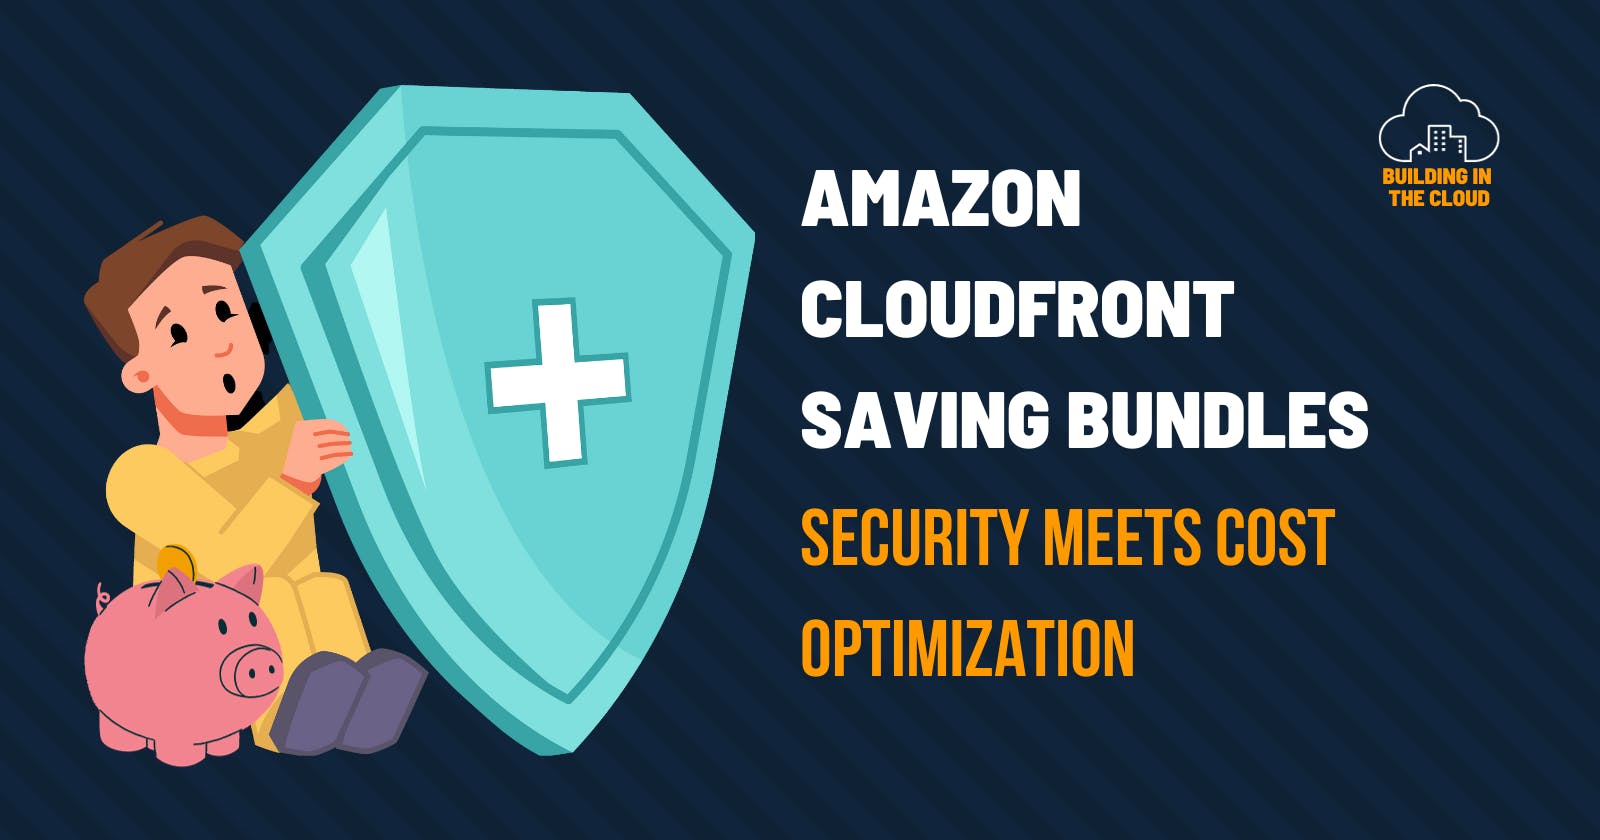 Amazon Cloudfront saving bundles